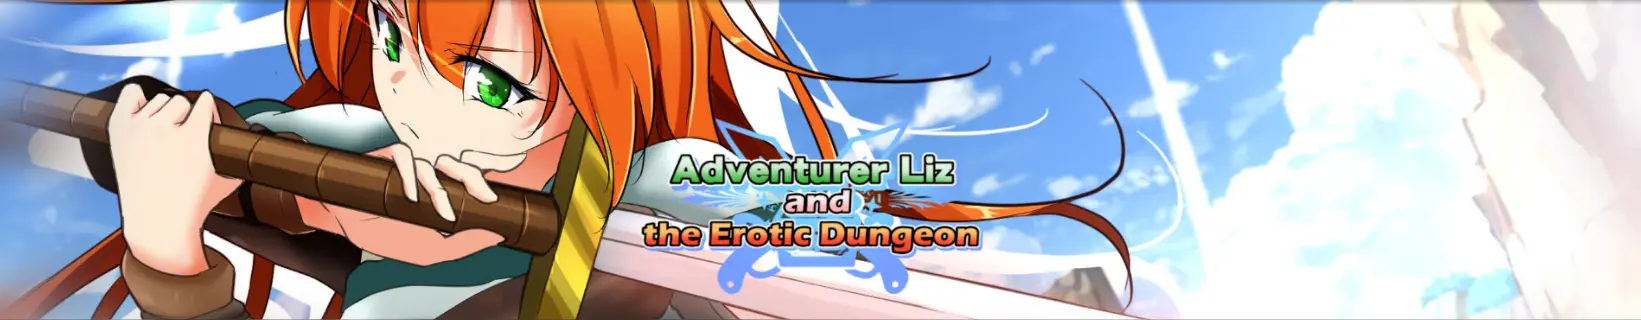 Adventurer Liz and the Erotic Dungeon main image